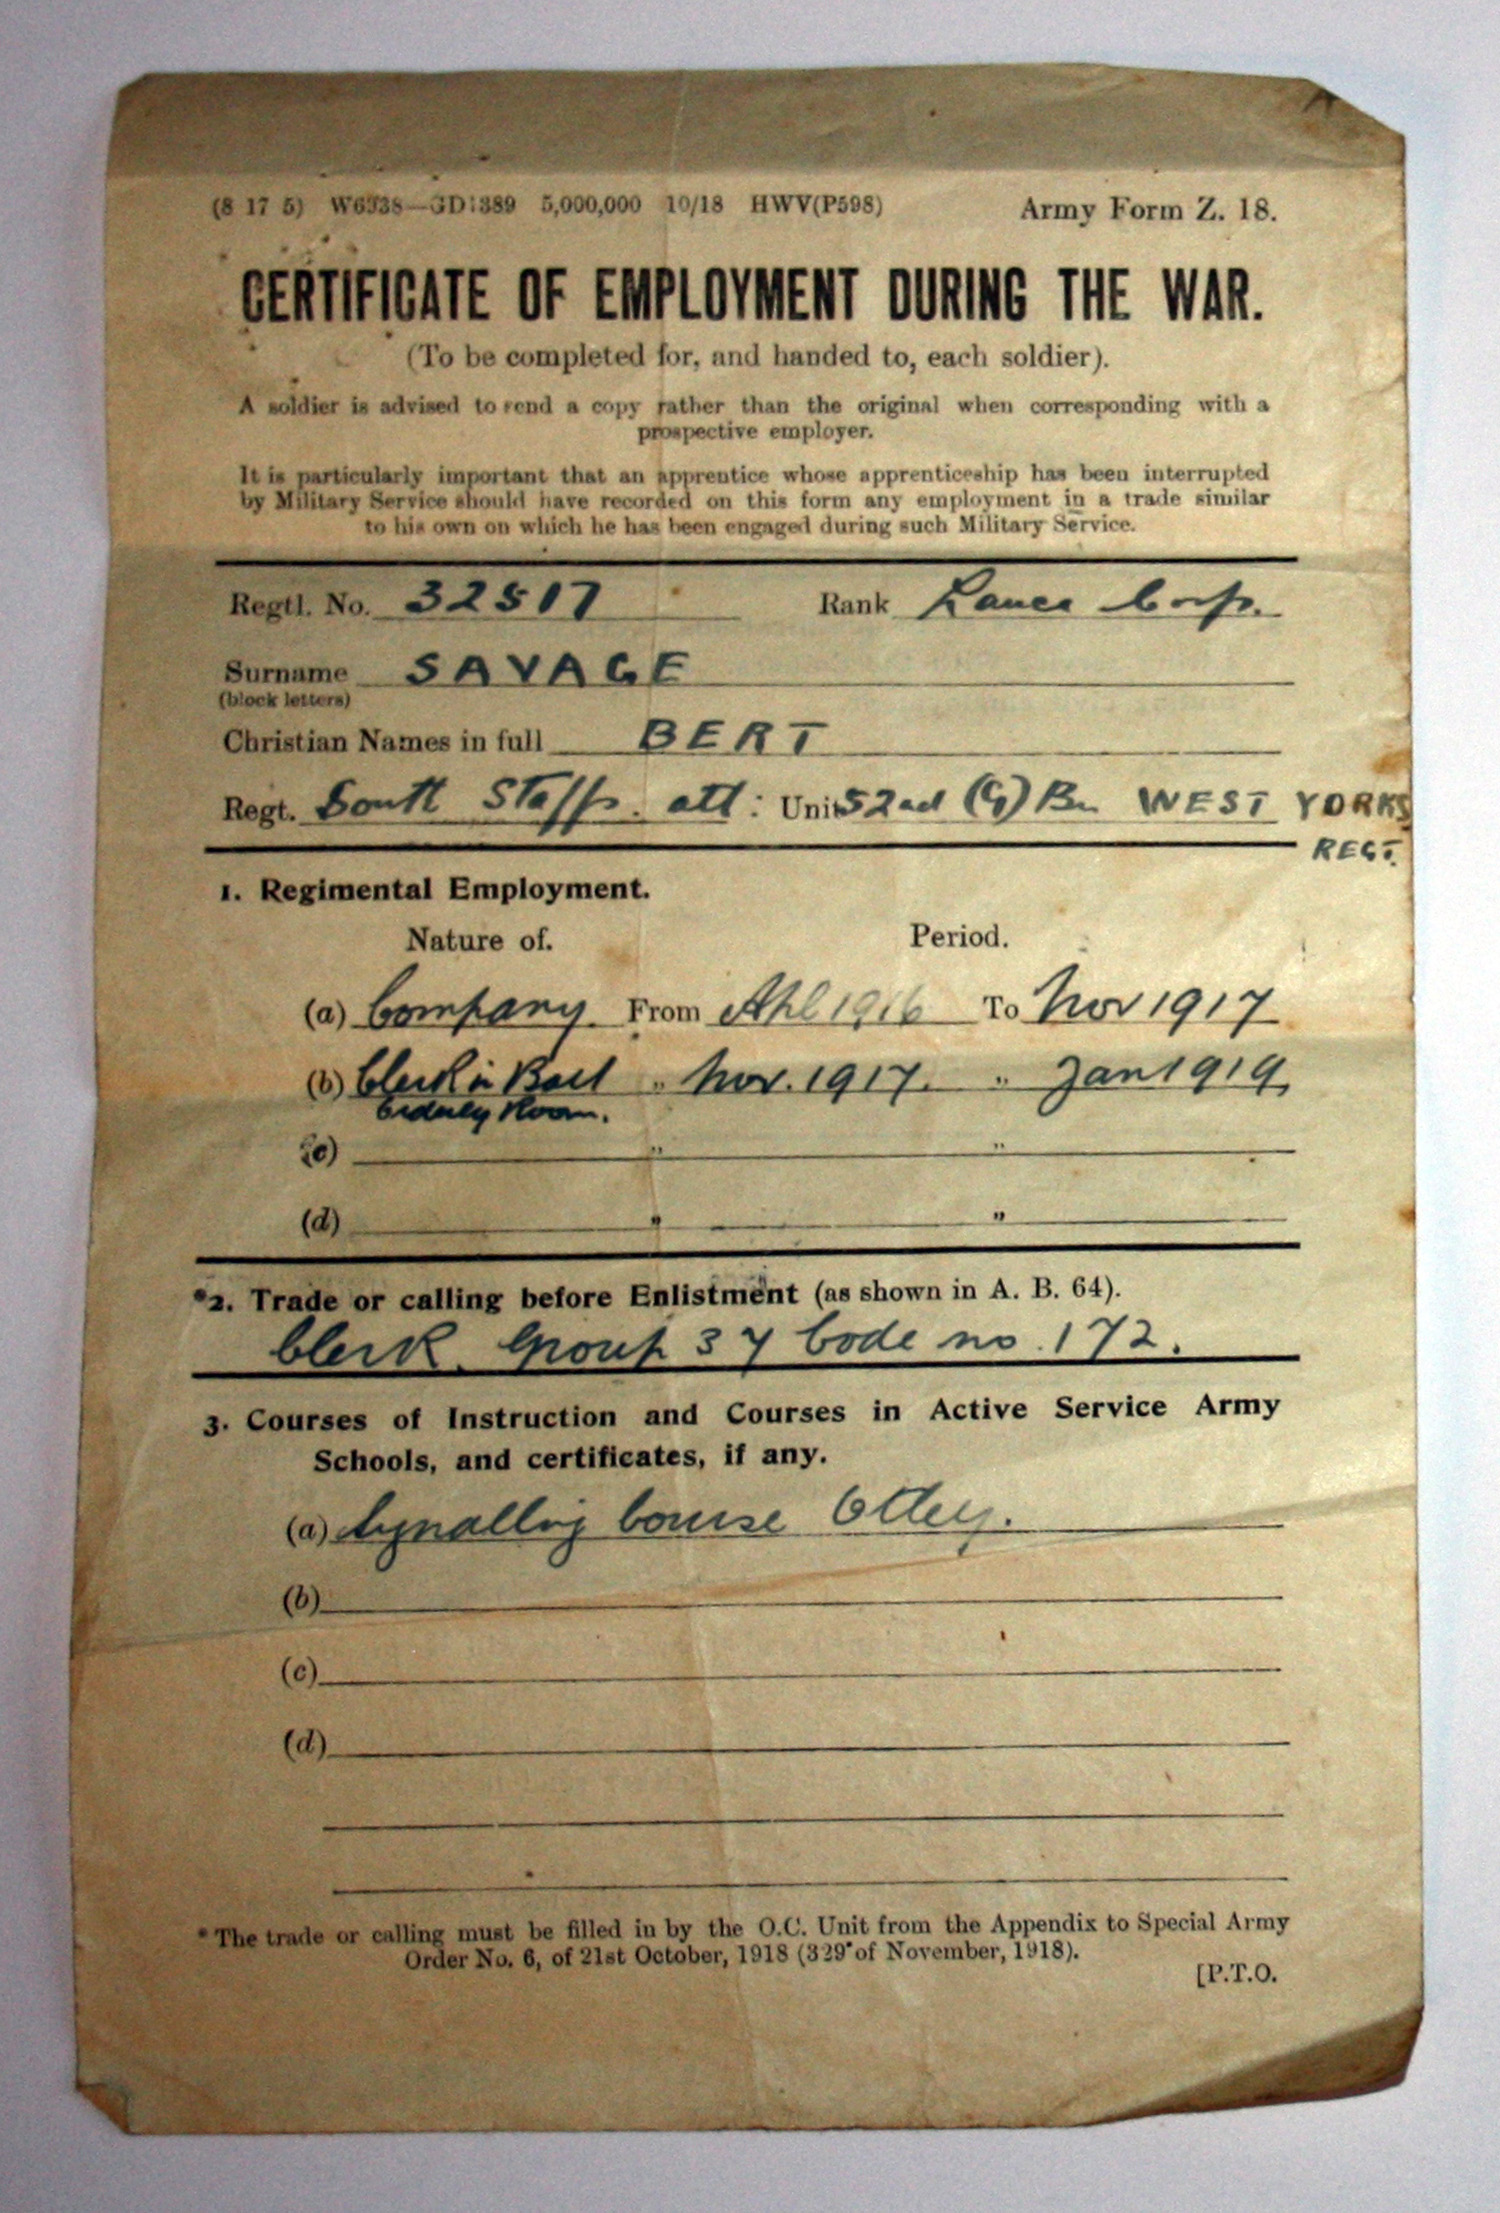 bert savage - certificate of employment during wartime.jpg